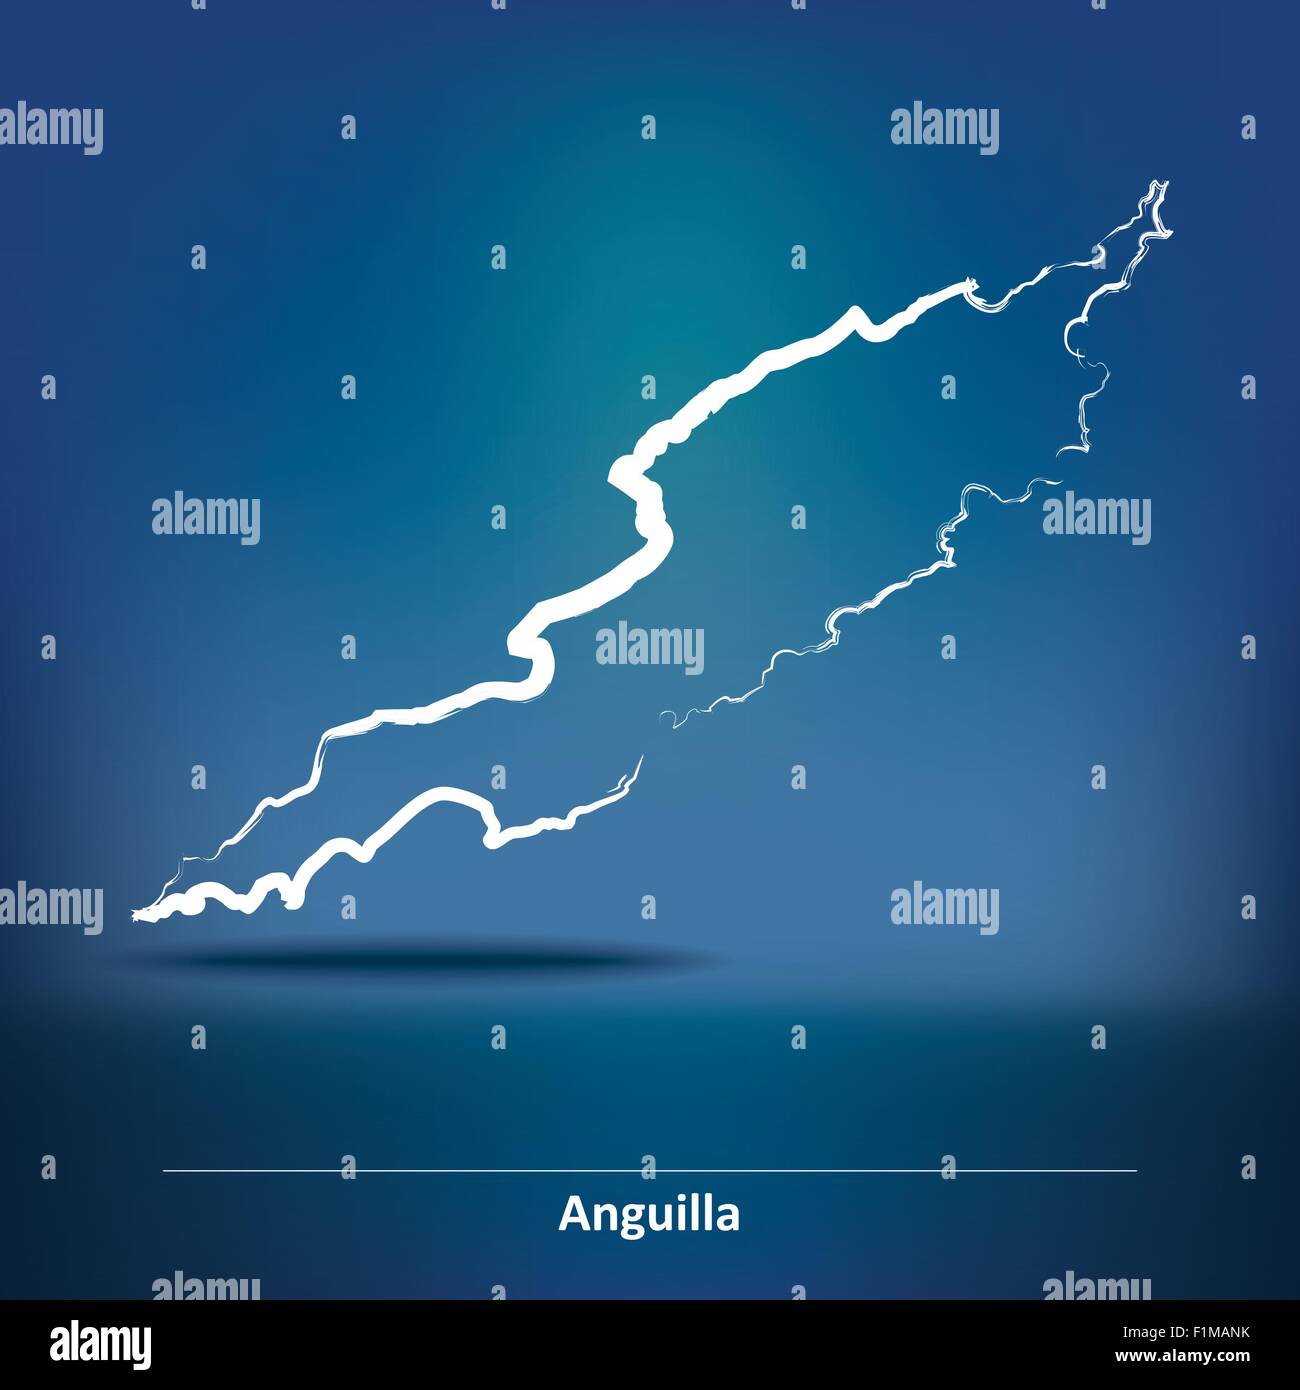 Karte von Anguilla - Vektor-Illustration Doodle Stock Vektor